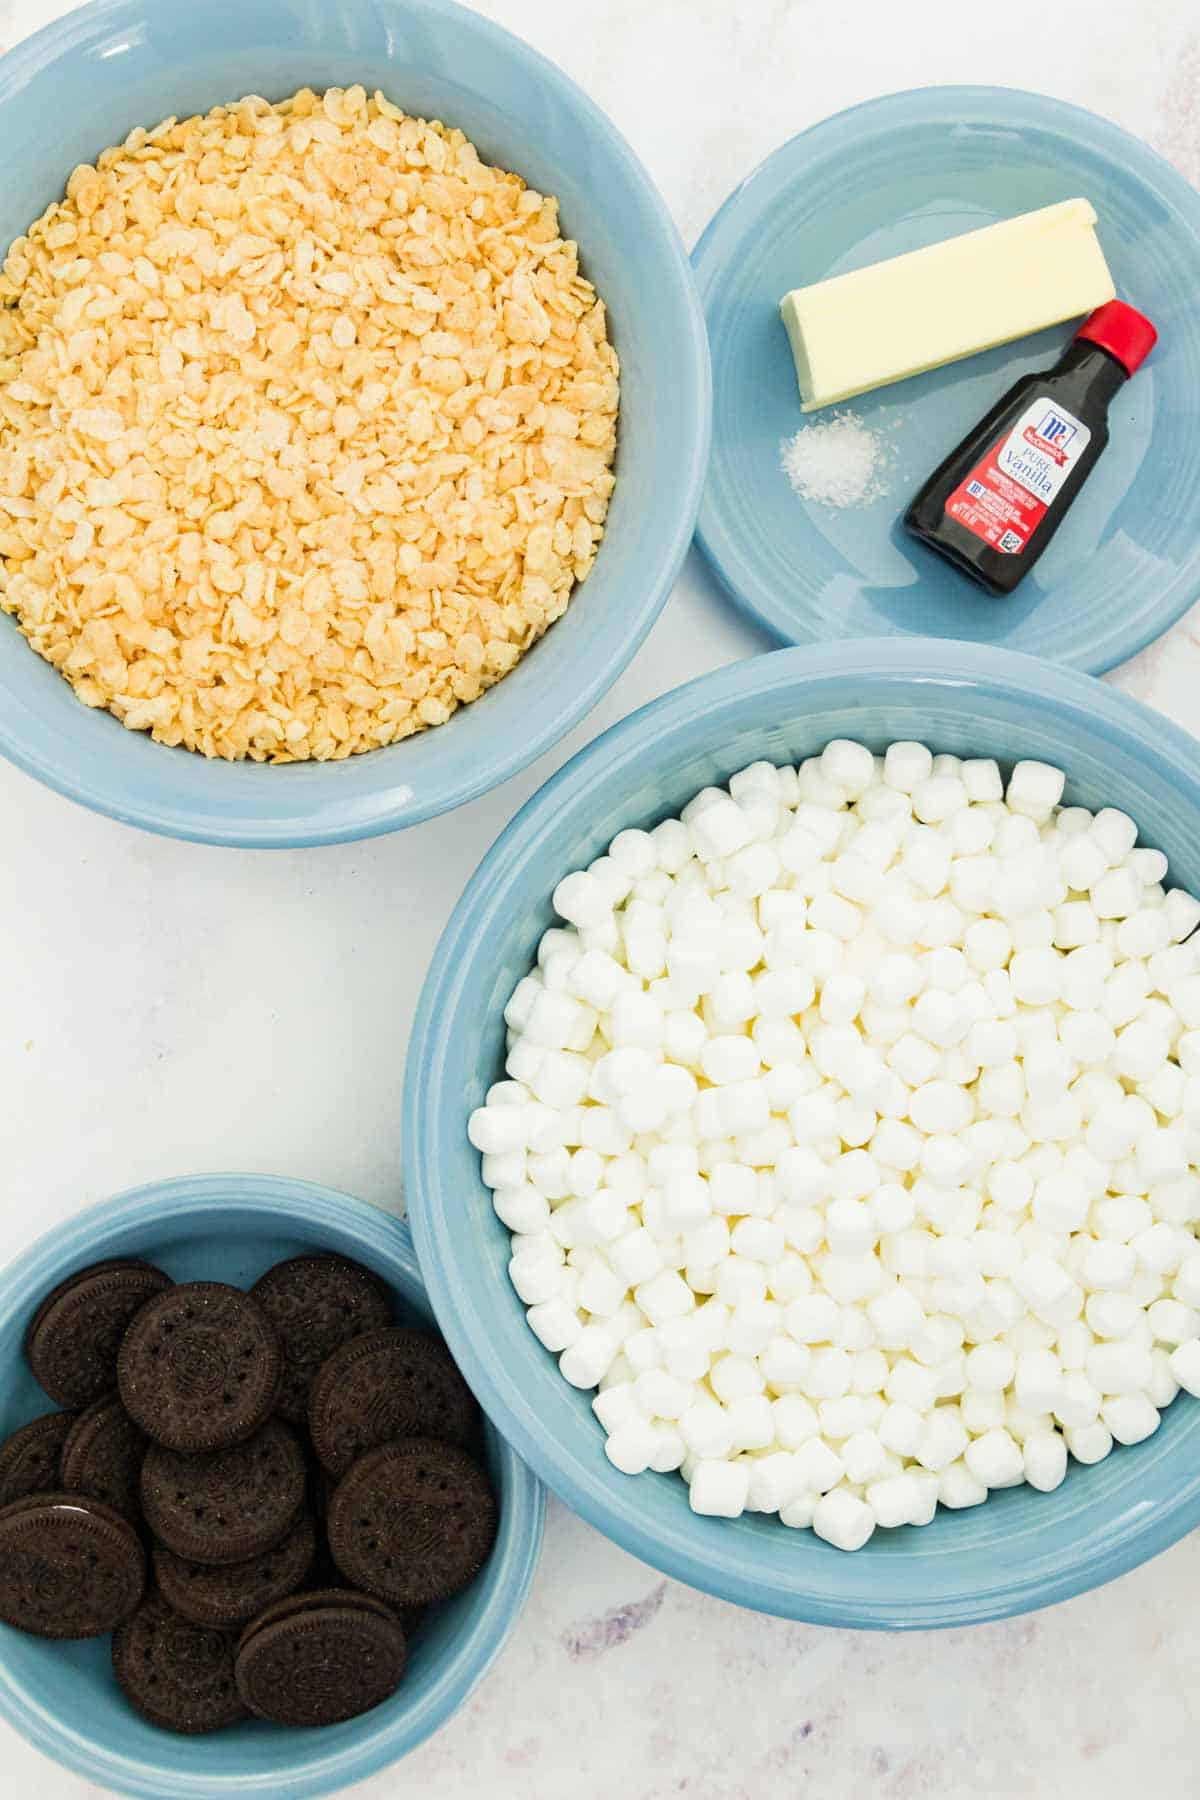 Ingredients to make Oreo Rice Krispies treats: Oreos, rice cereal, mini marshmallows, vanilla, and butter.